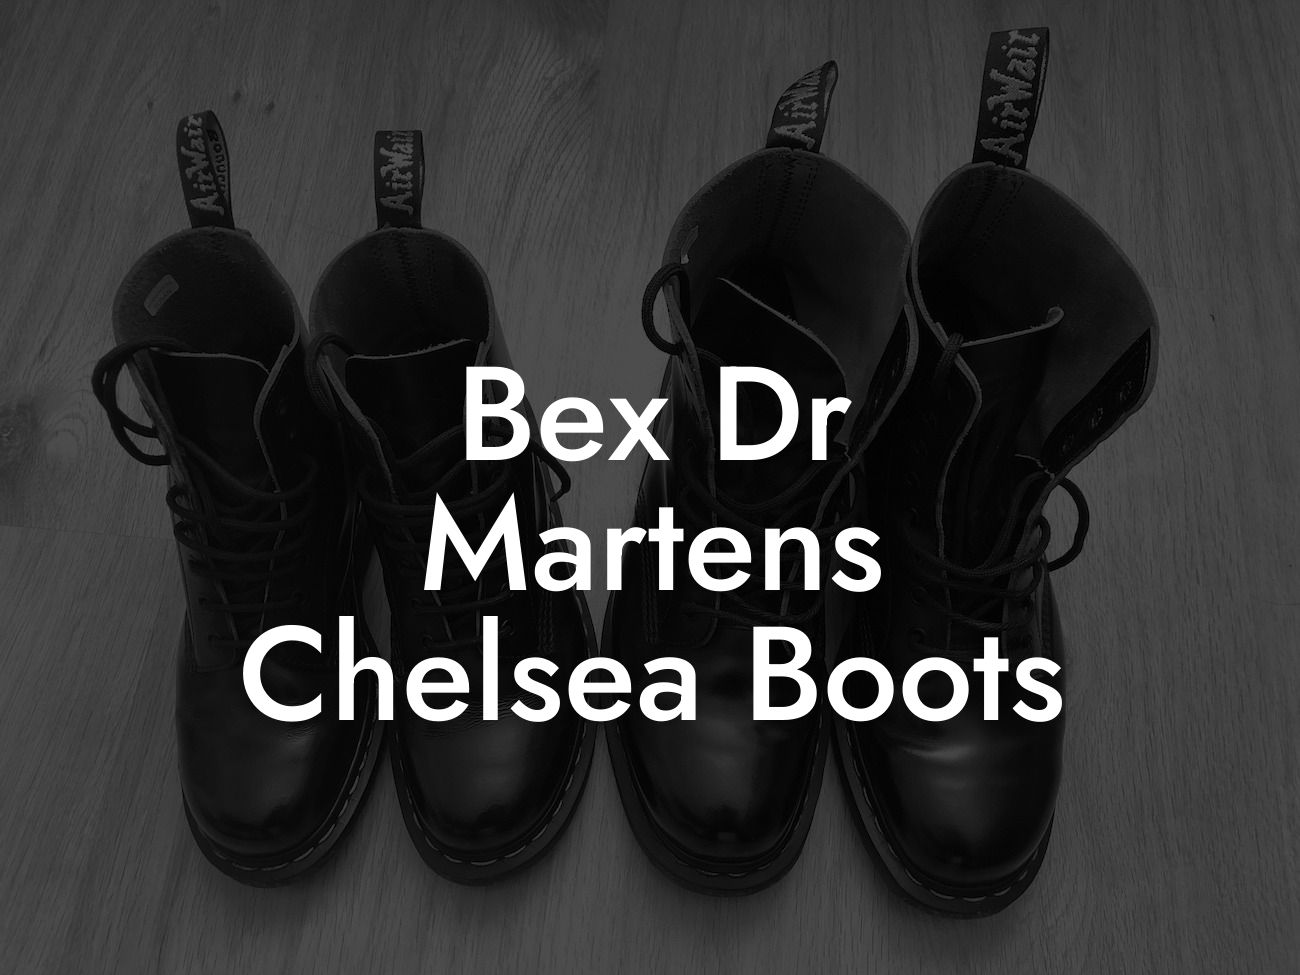 Bex Dr Martens Chelsea Boots